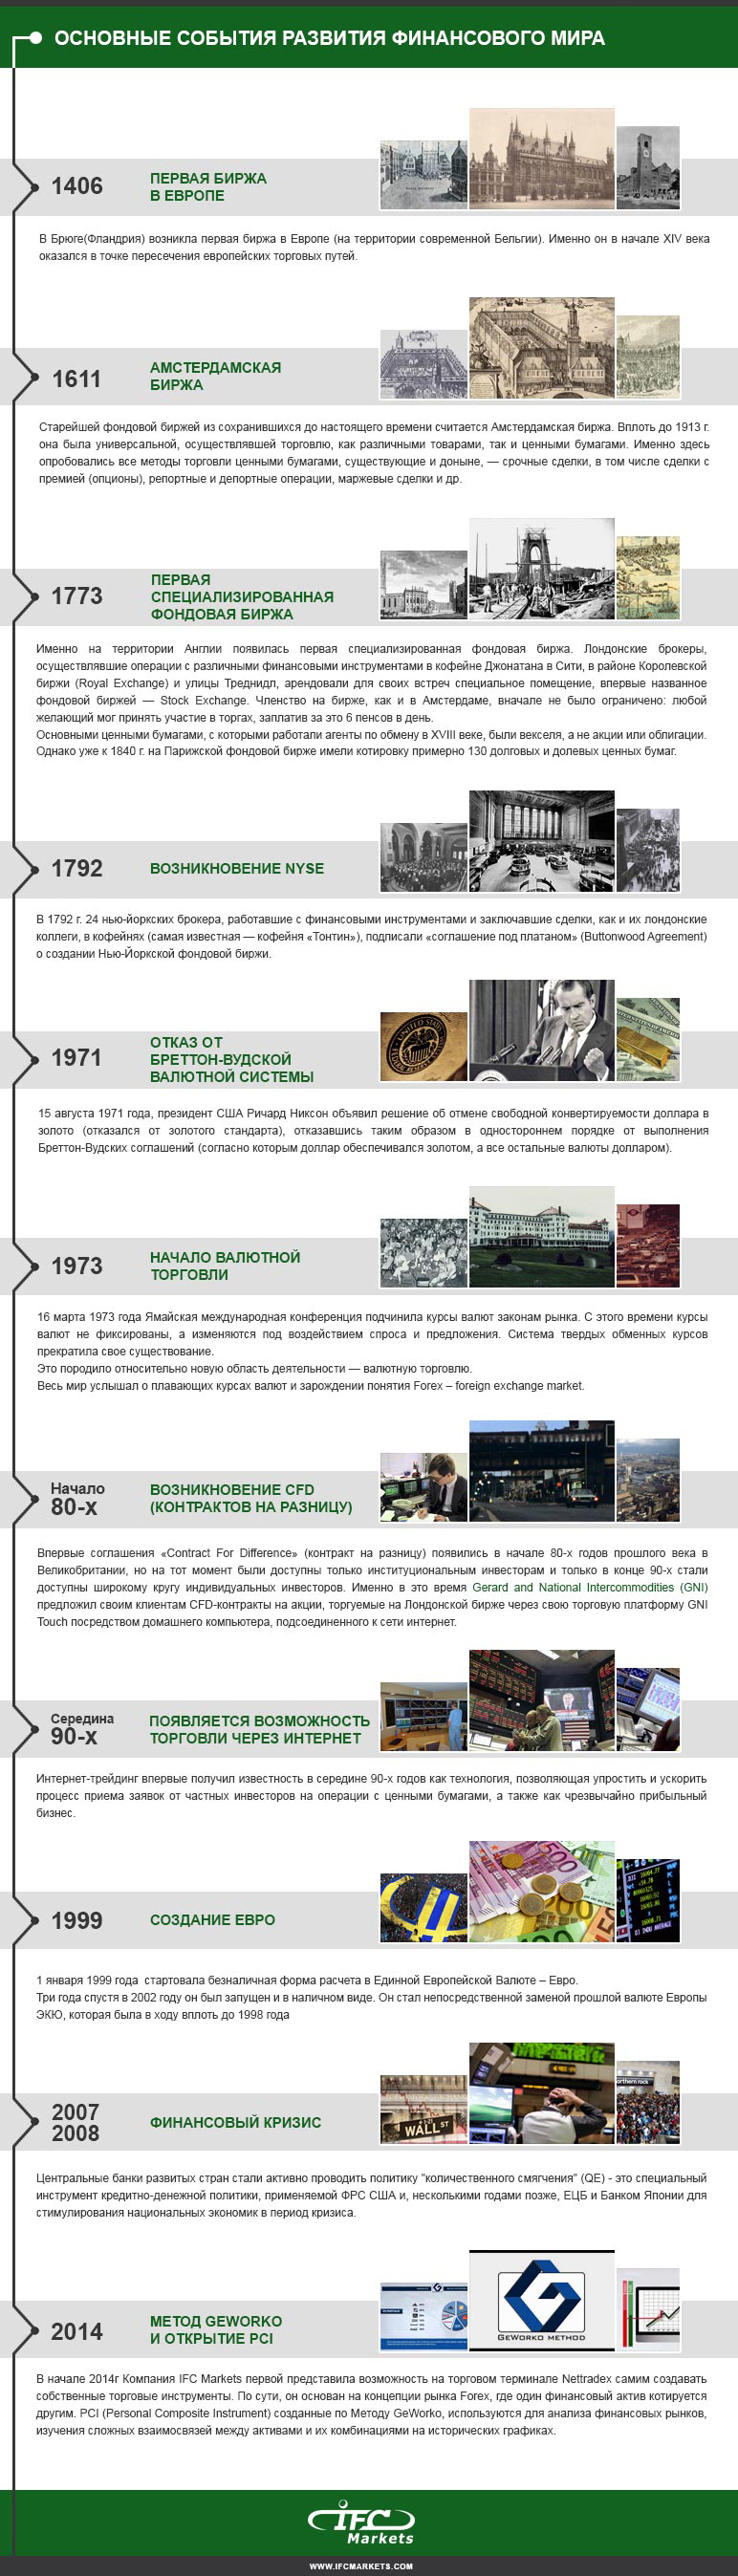 infographics-history